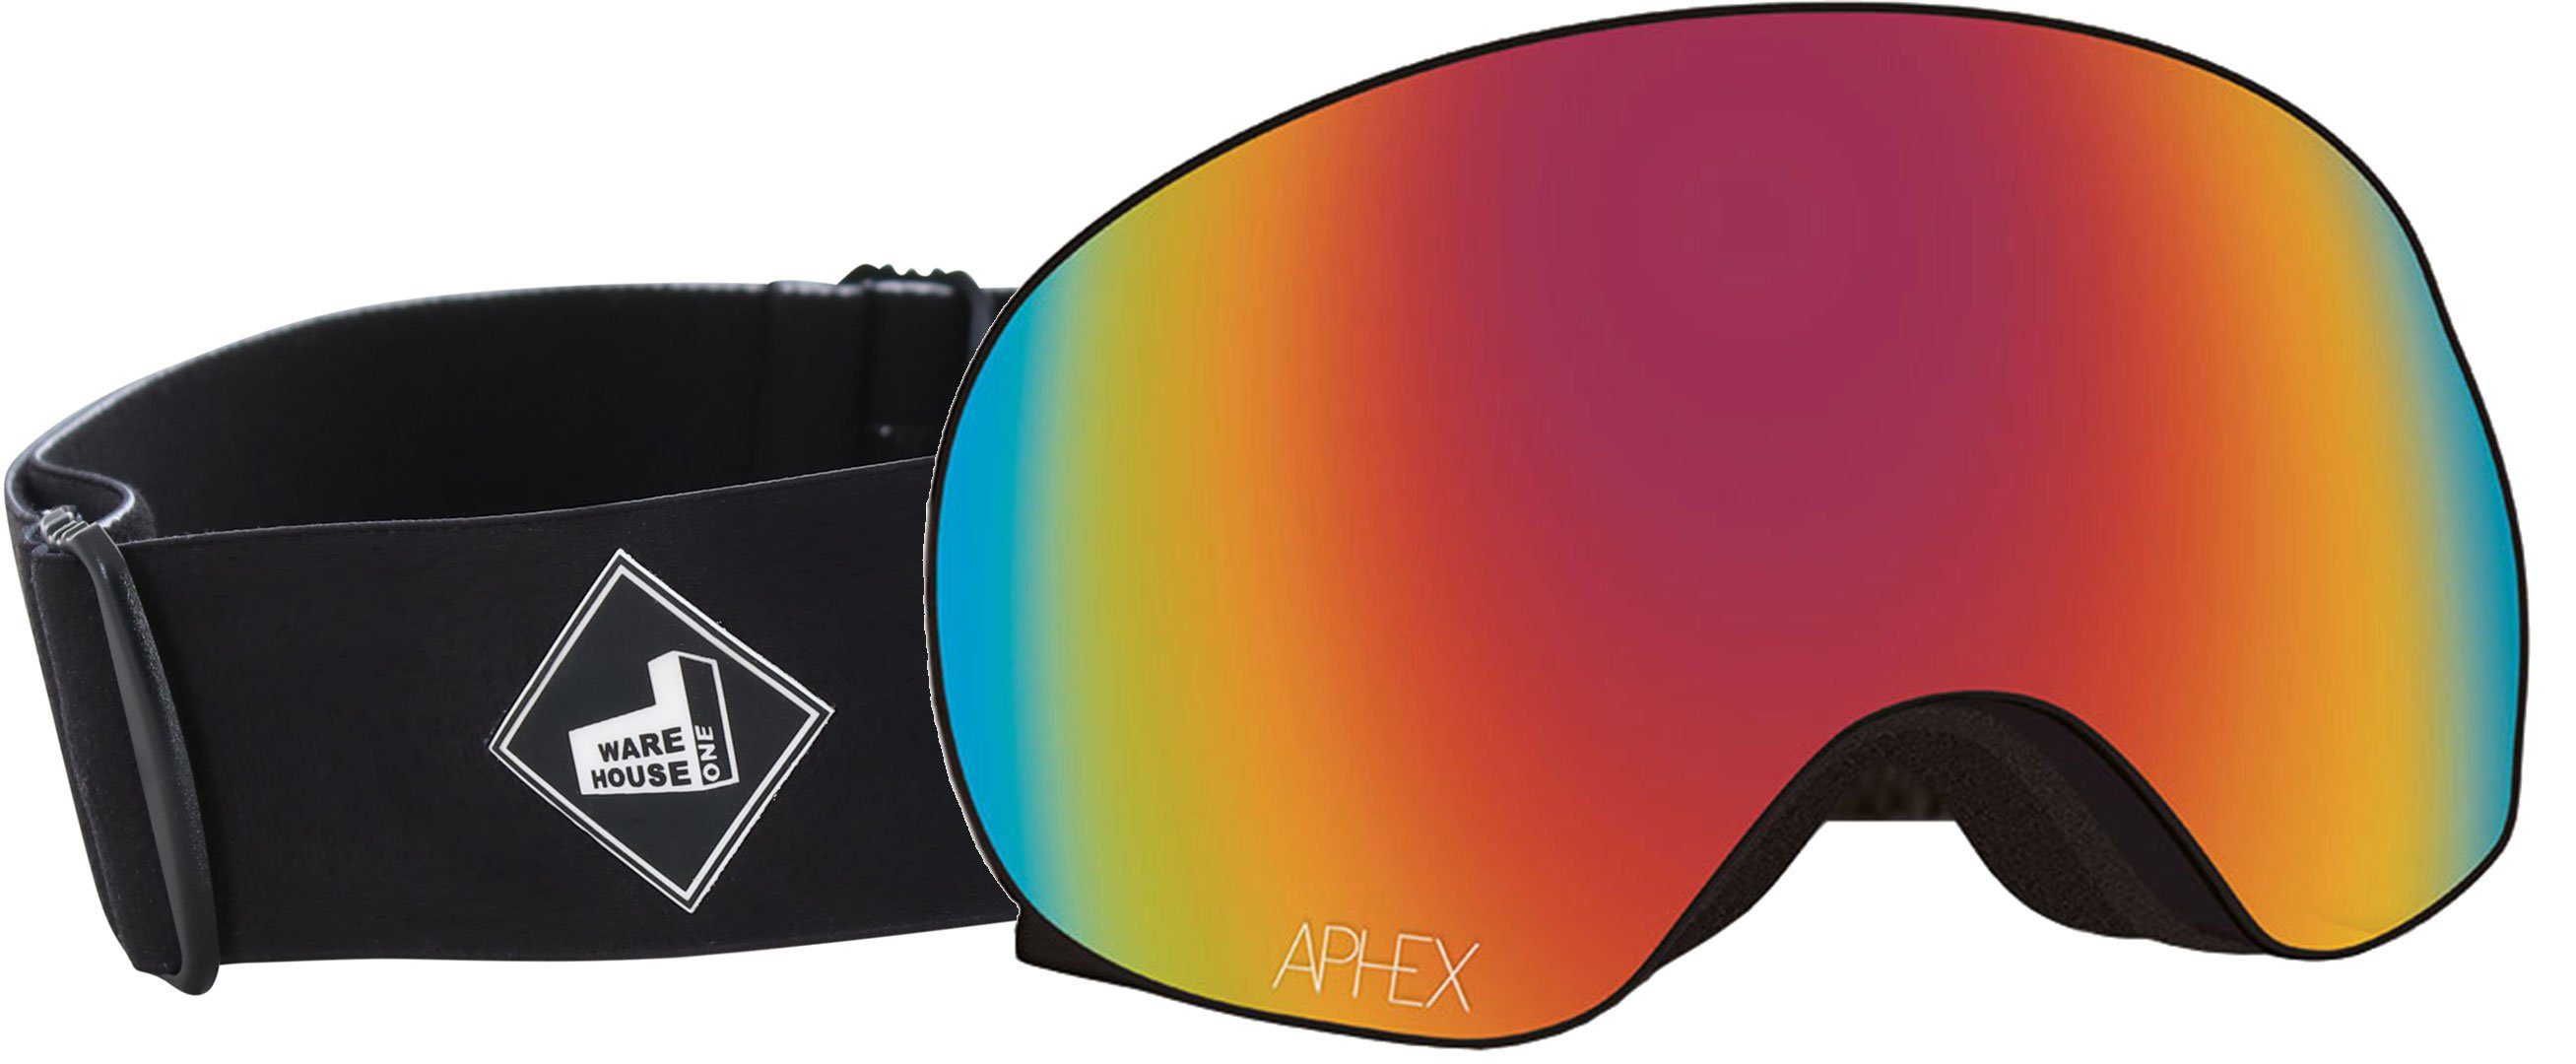 Aphex THE Schneebrille Magnet APHEX + XPR black Snowboardbrille Glas EDITION strap ONE